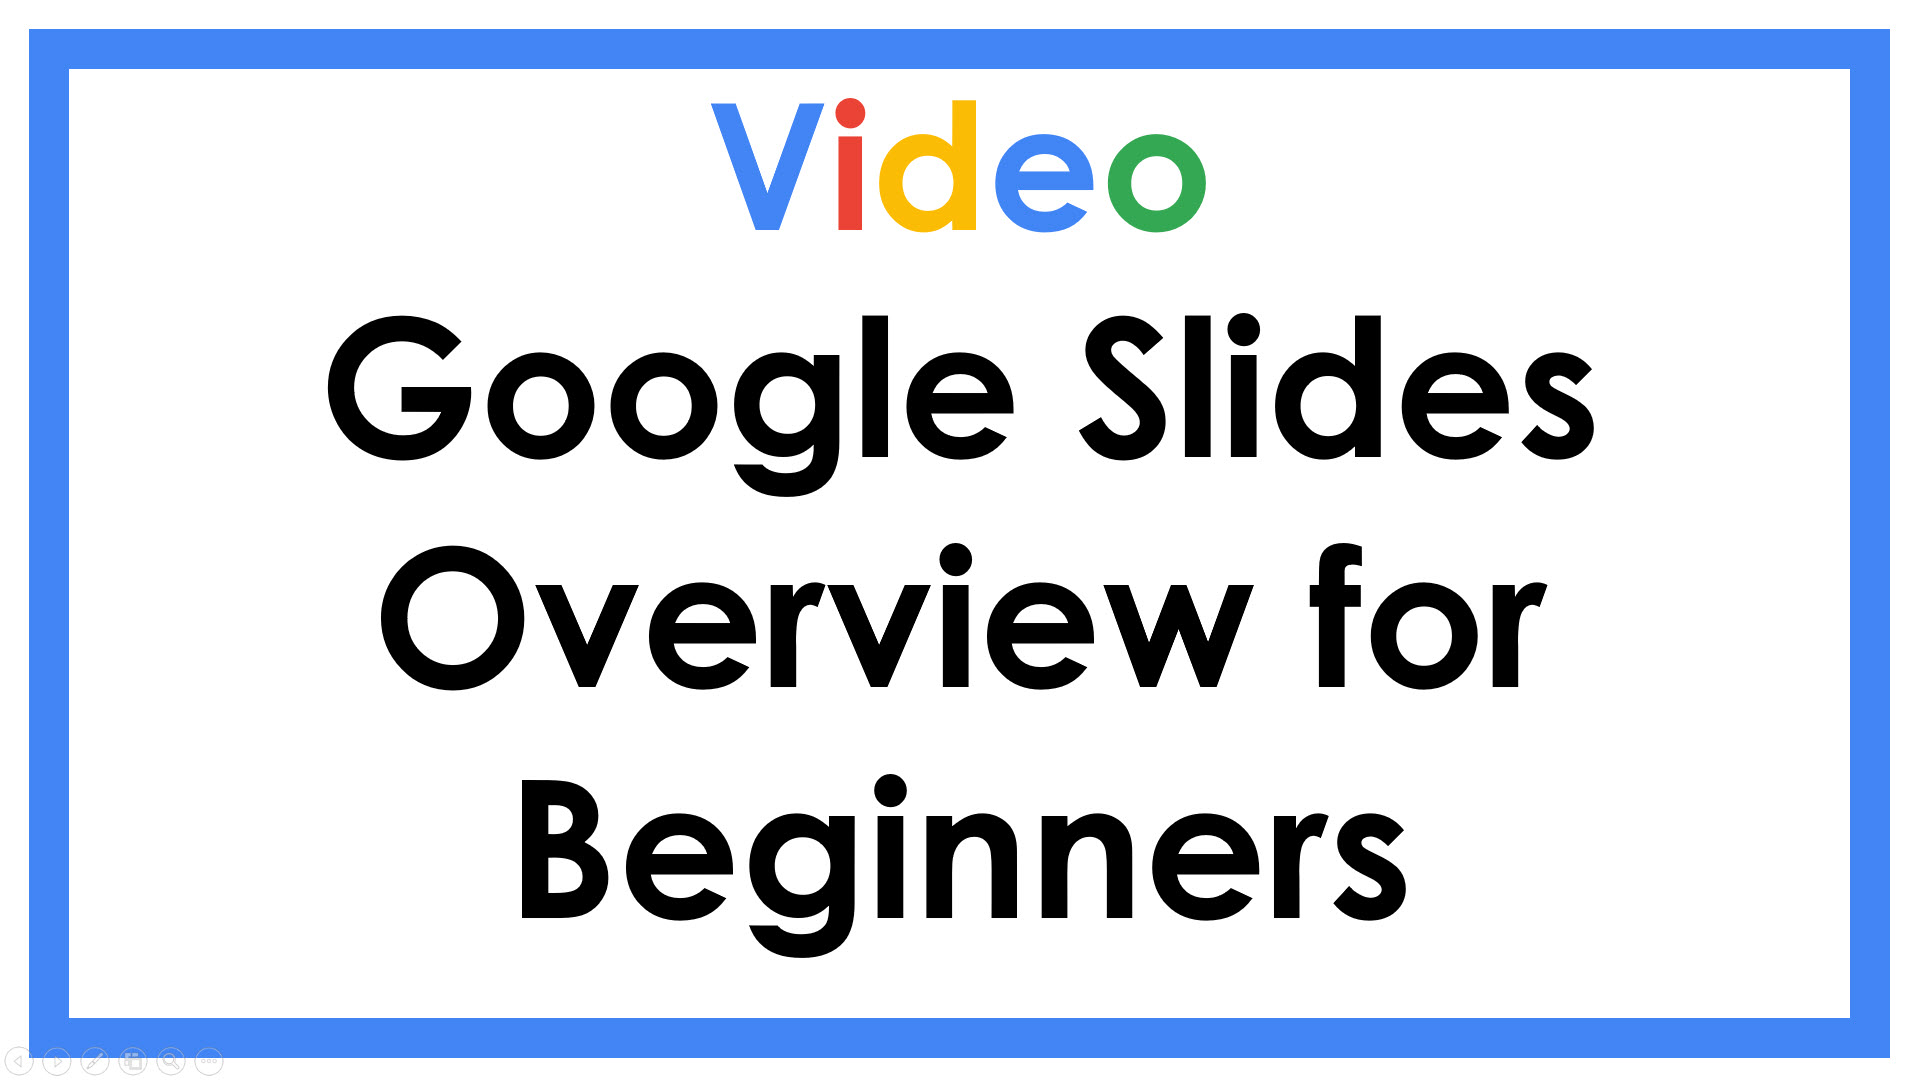 Google Slides Overview for Beginners